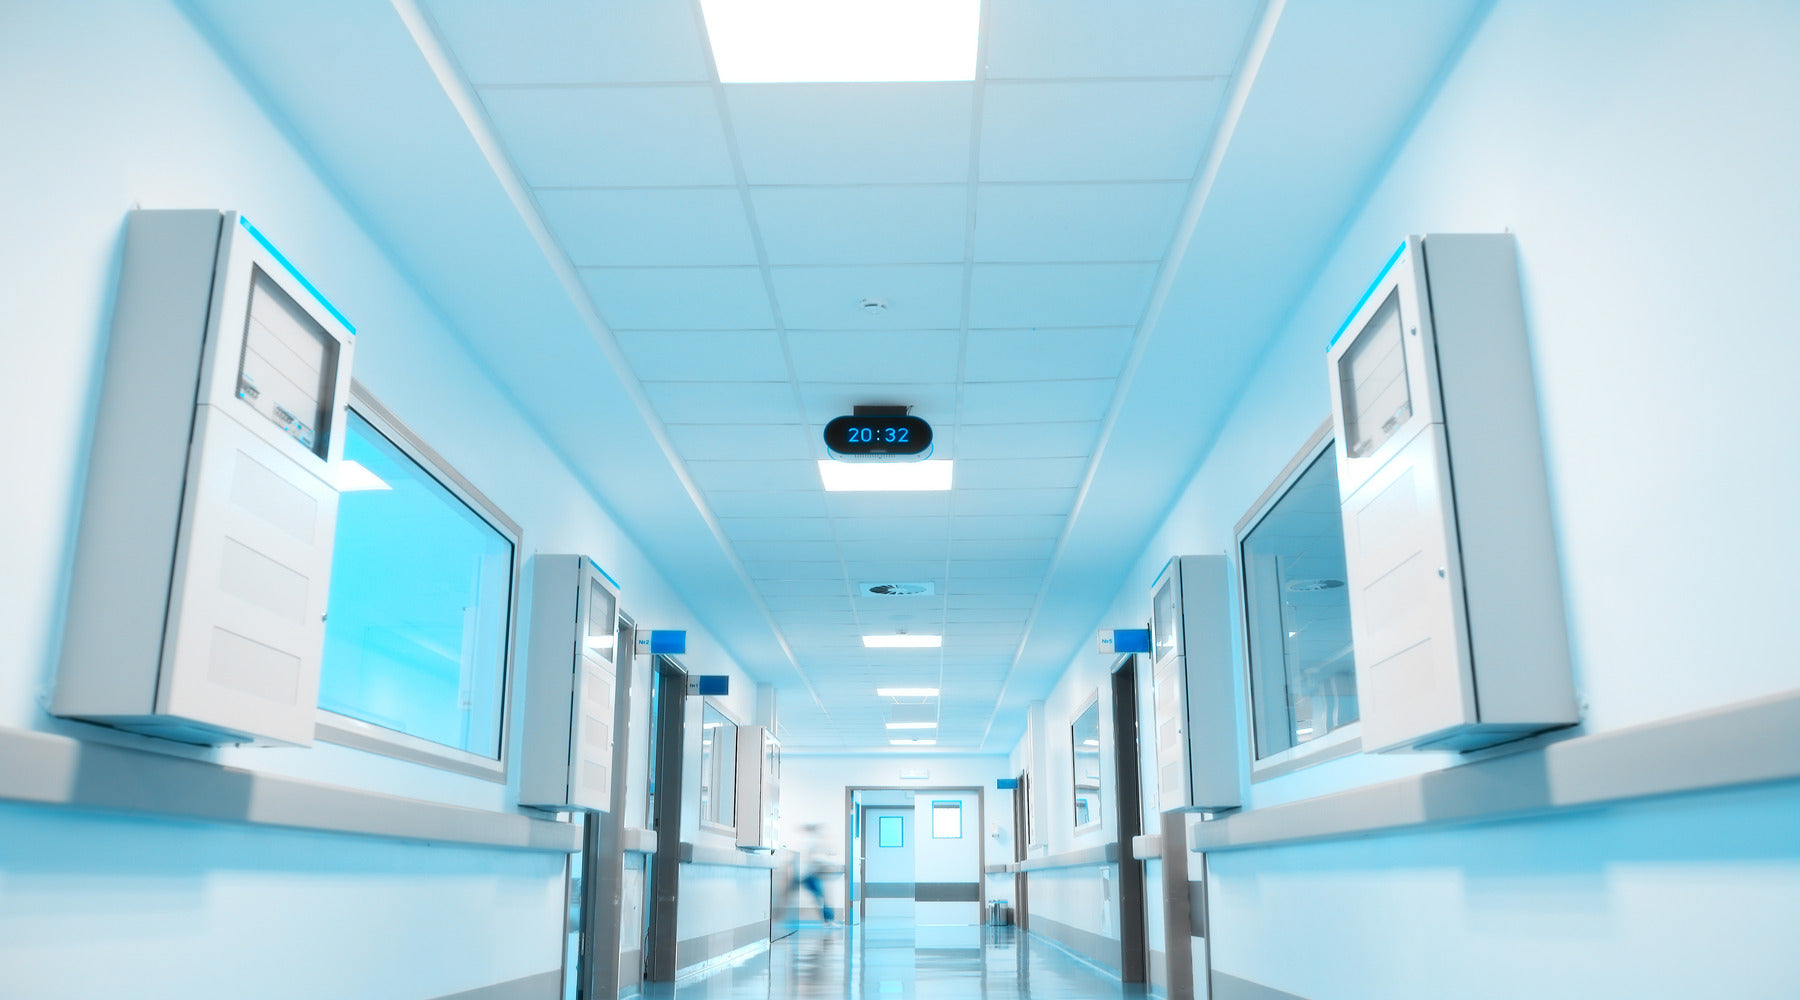 T5 LED bulbs used in drop ceiling fixtures inside hospital corridor